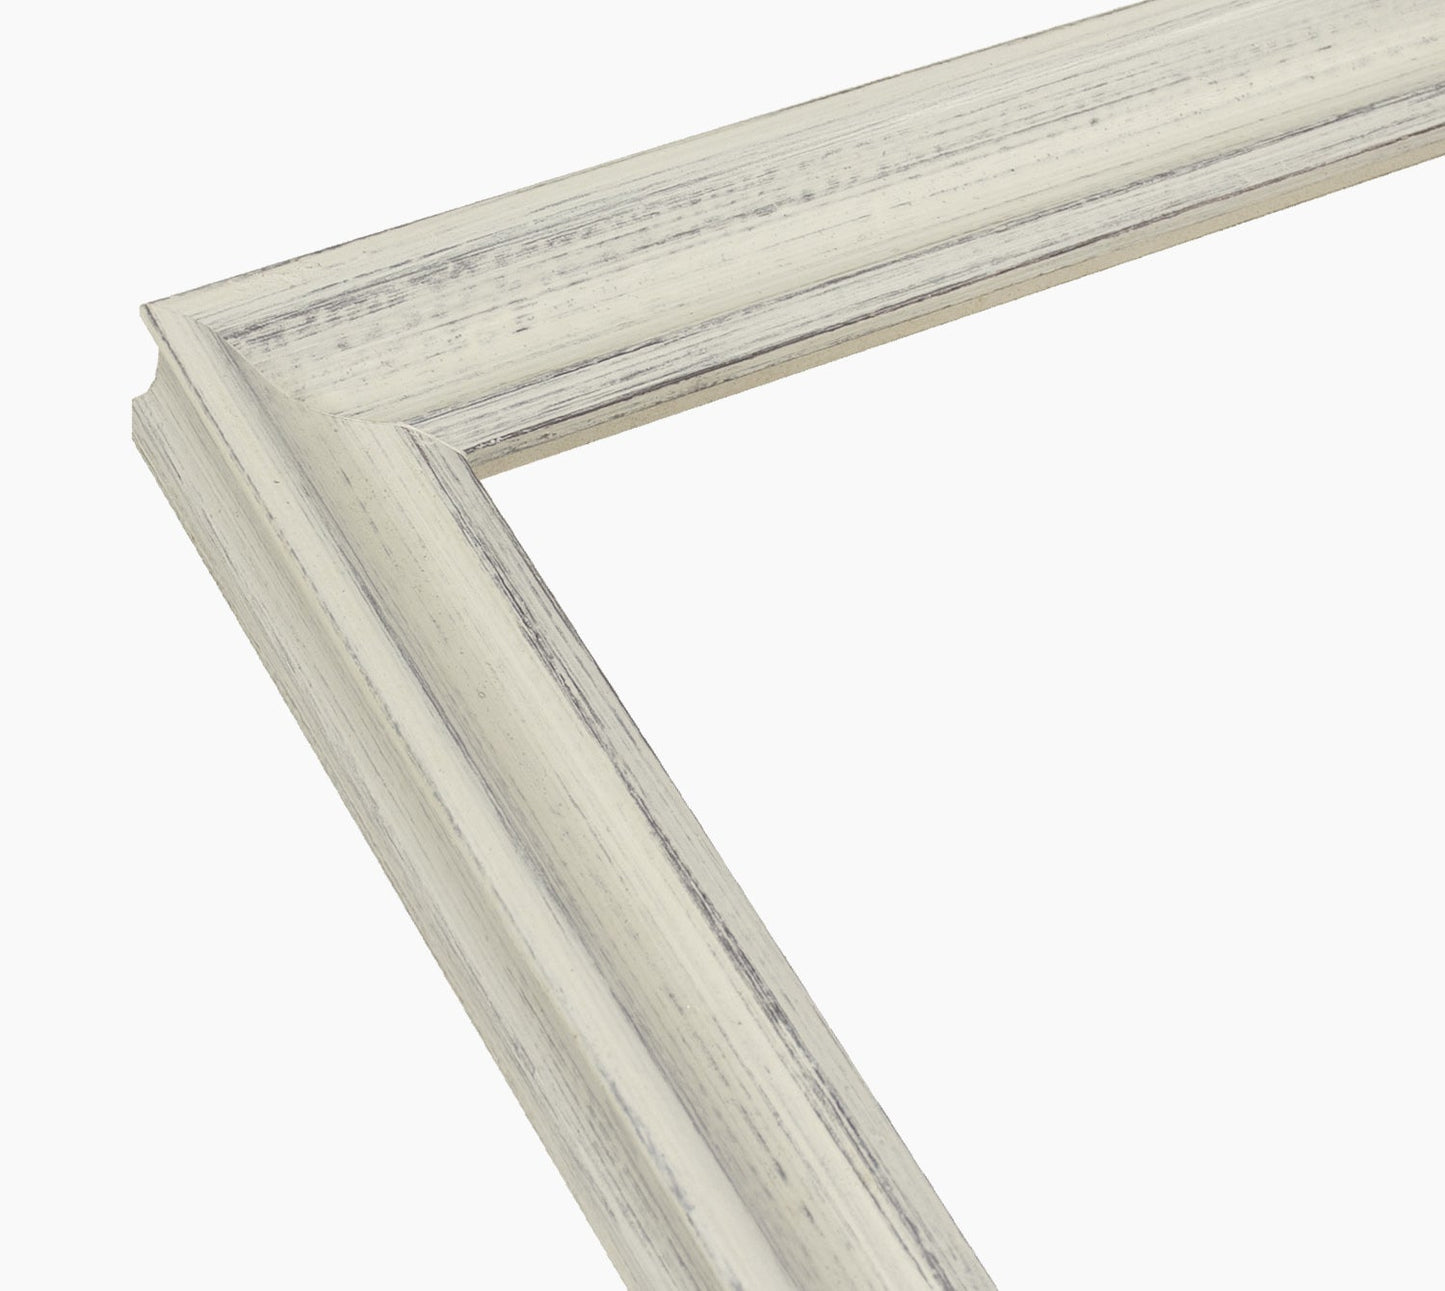 145.920 cadre en bois blanc avec fond marron mesure de profil 35x30 mm Lombarda cornici S.n.c.